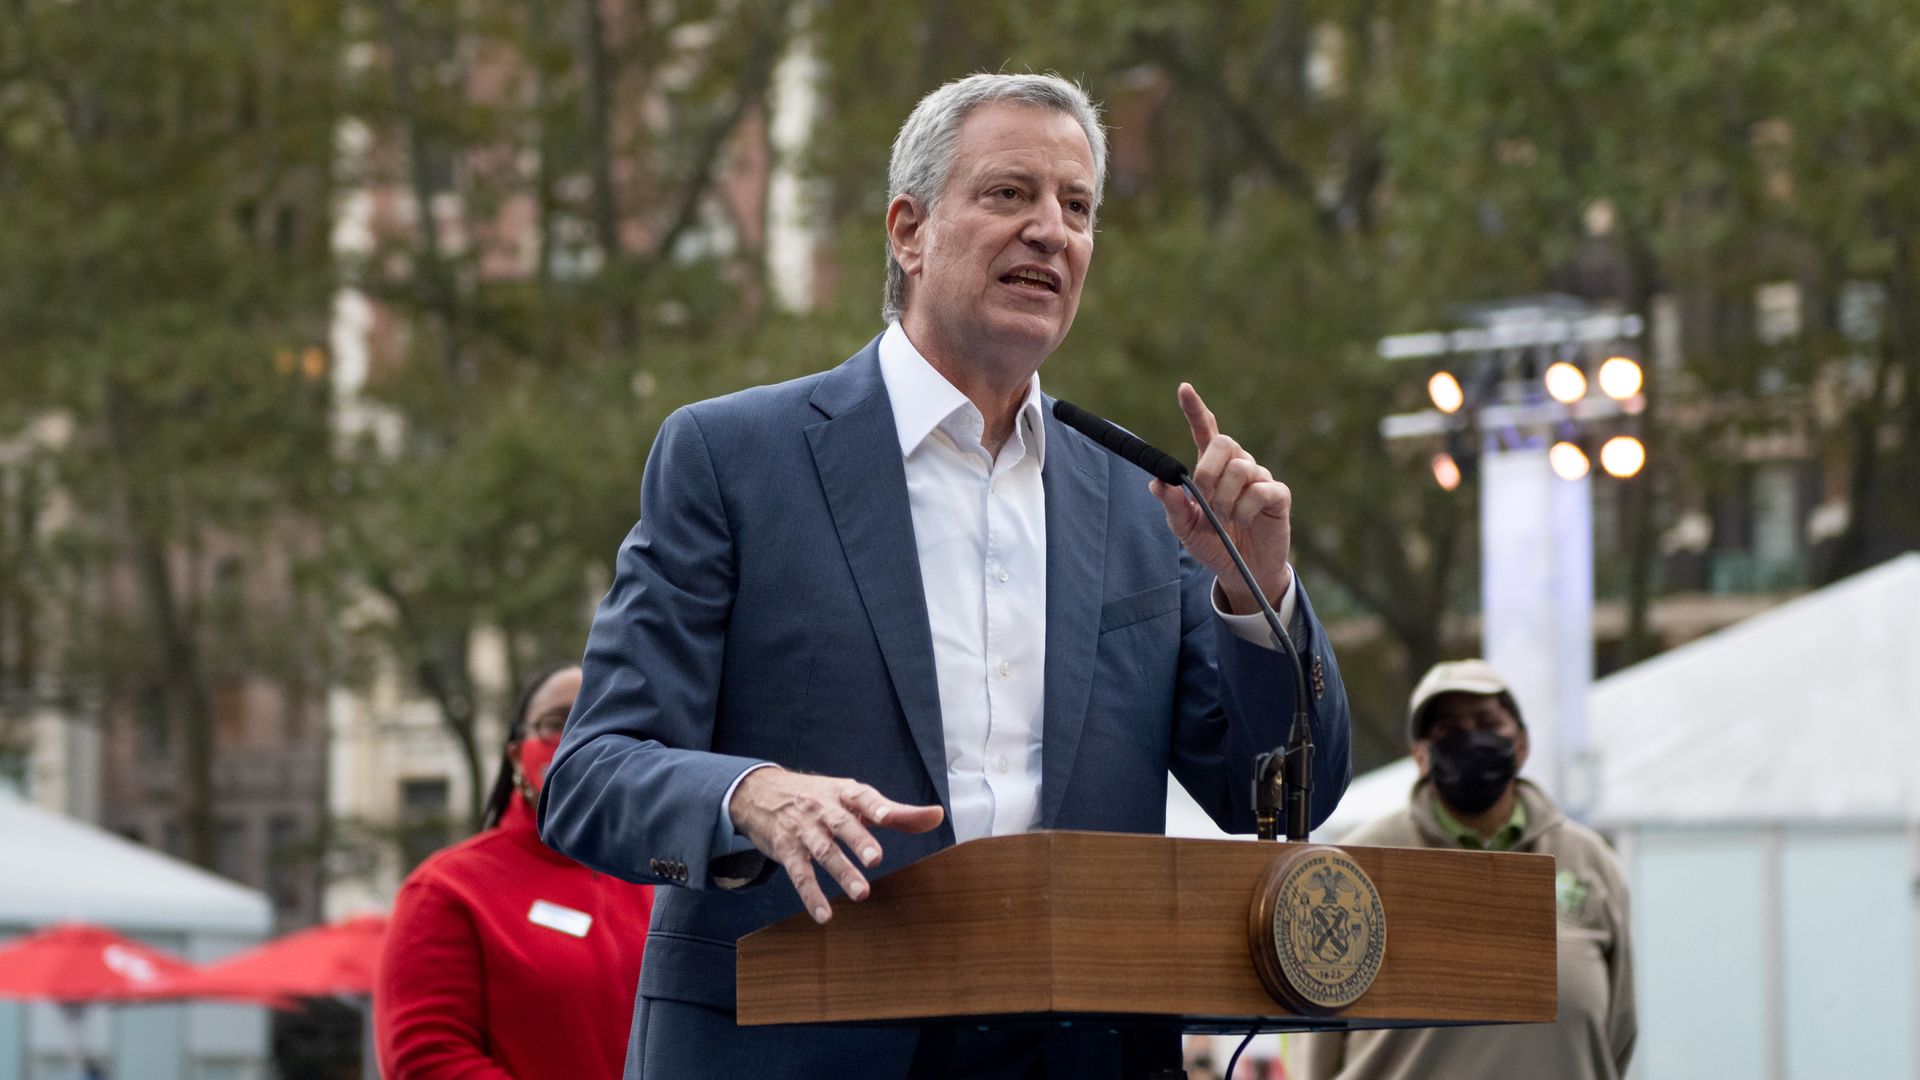 Picture of New York City mayor Bill de Blasio speaking on a podium